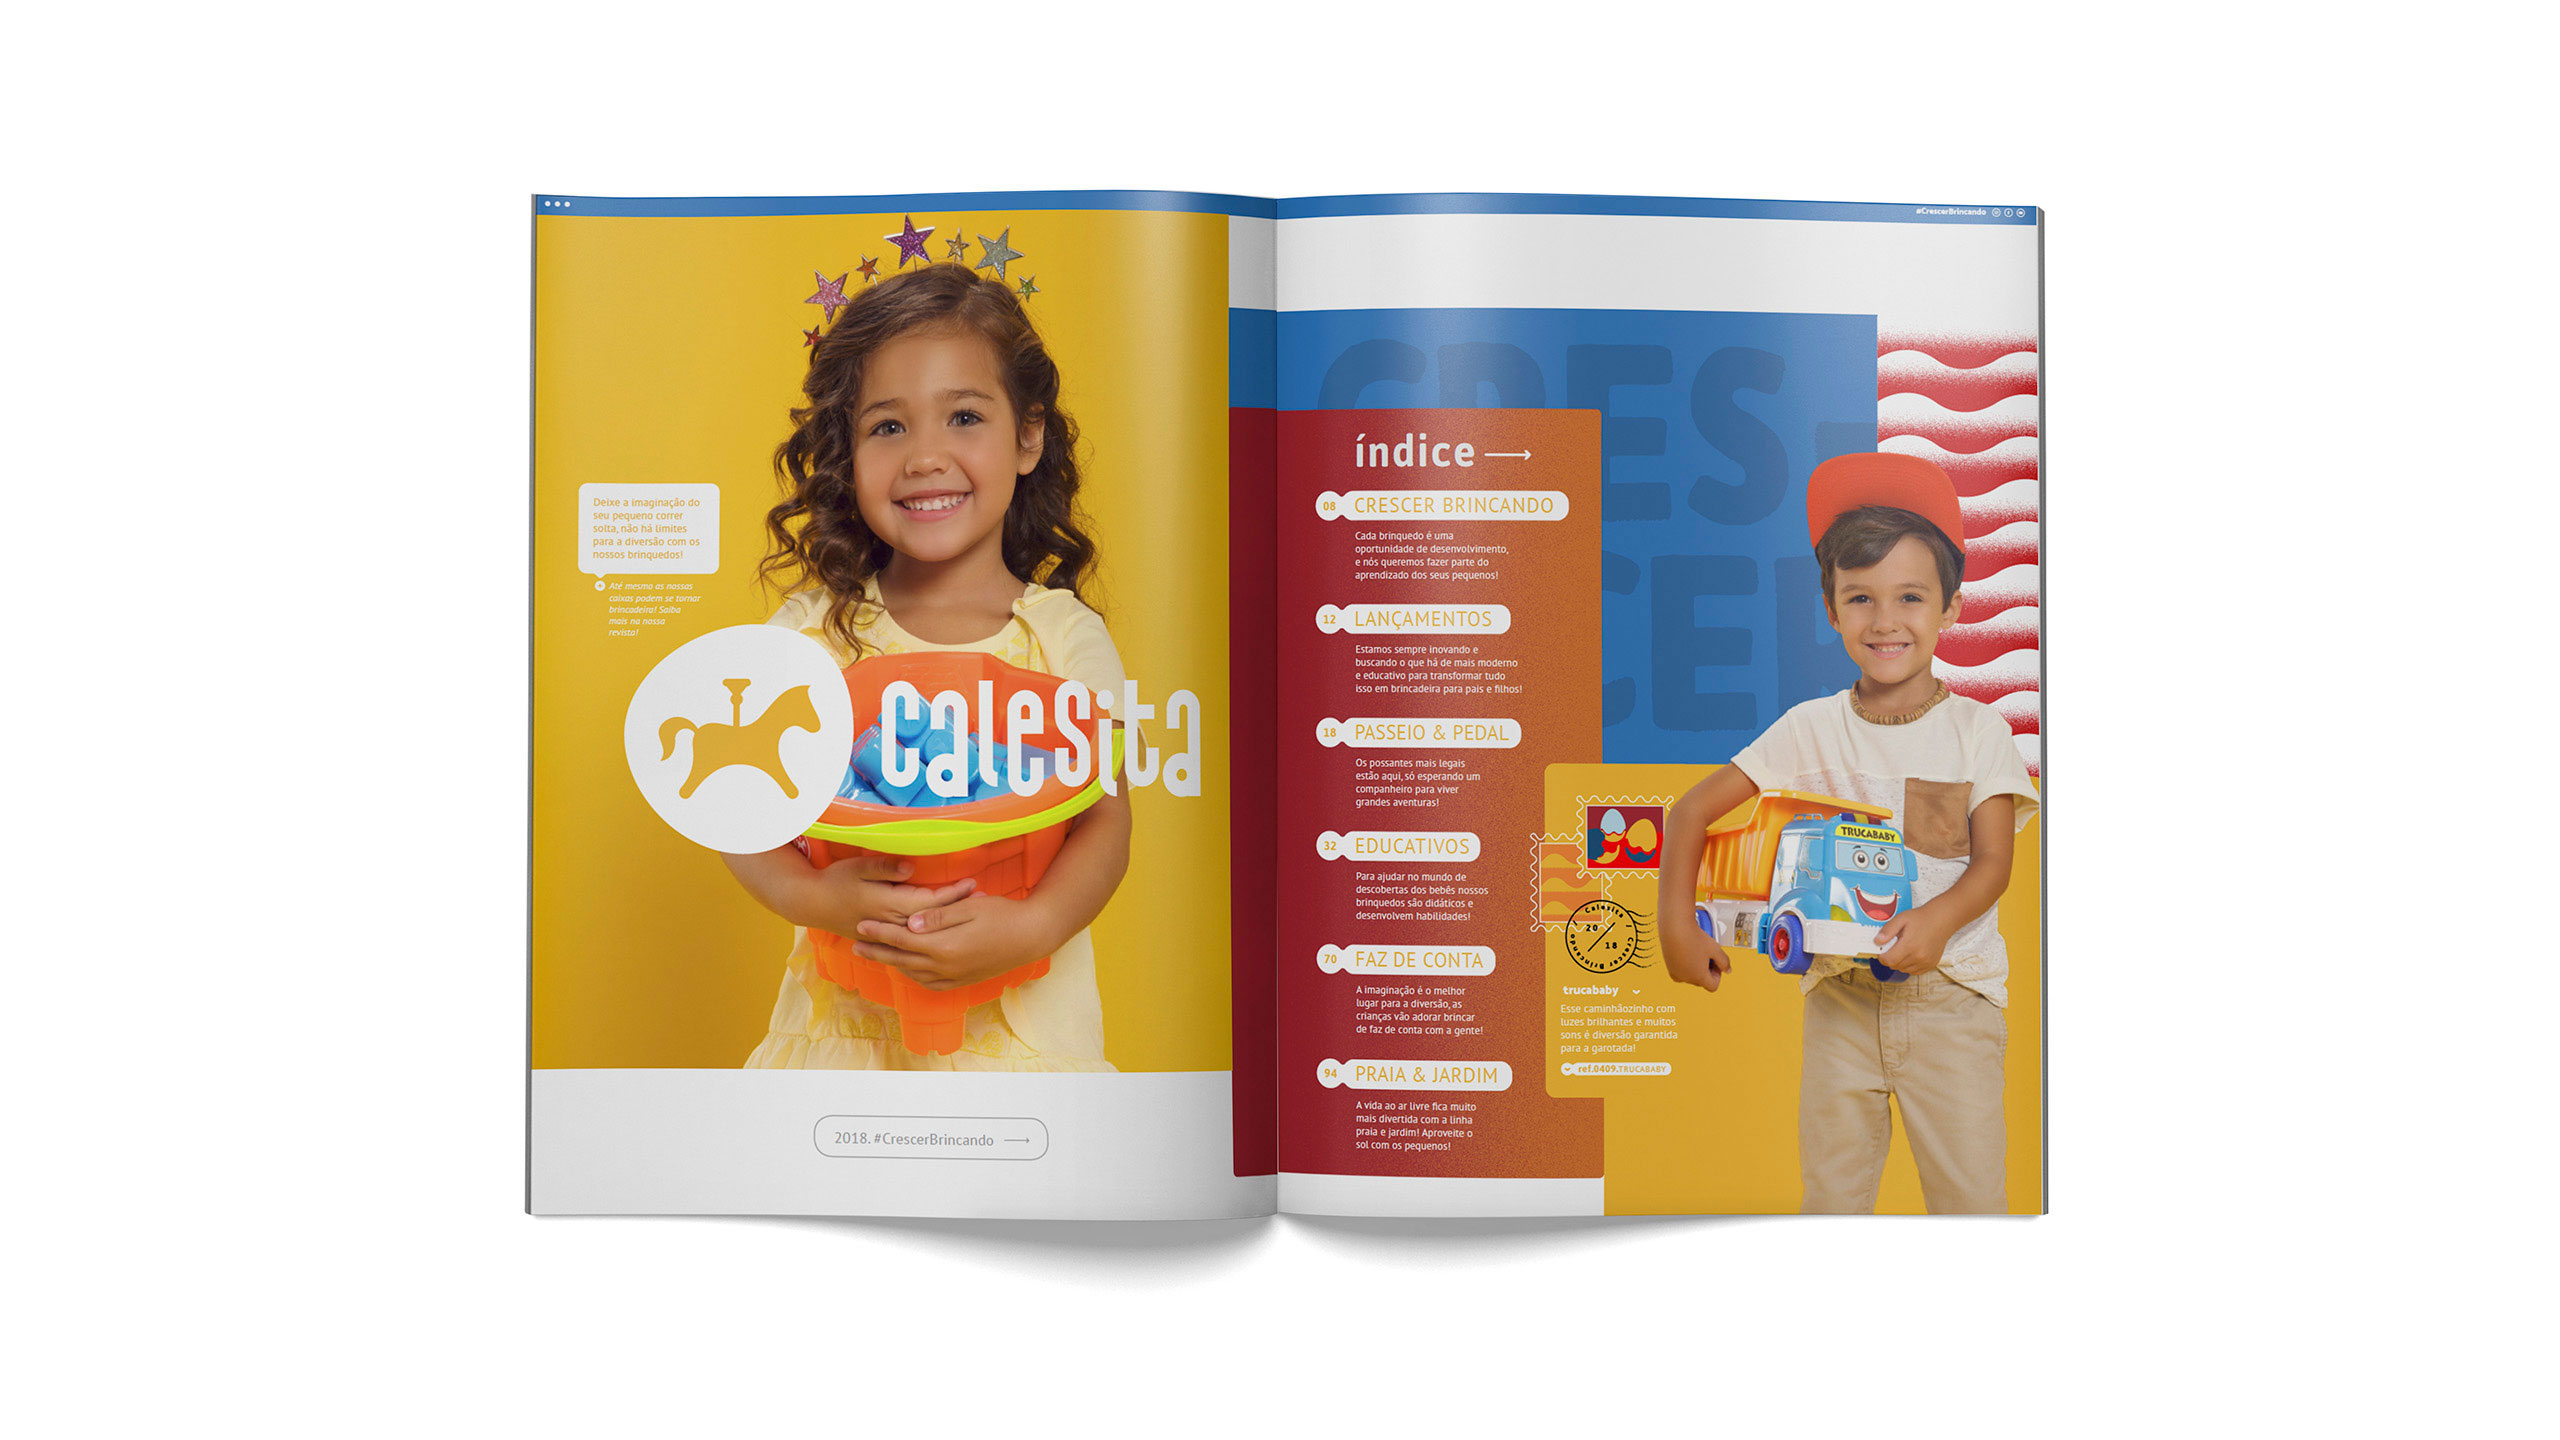 estudio de design carpintaria para Calesita aplicacao catalogo campanha infantil